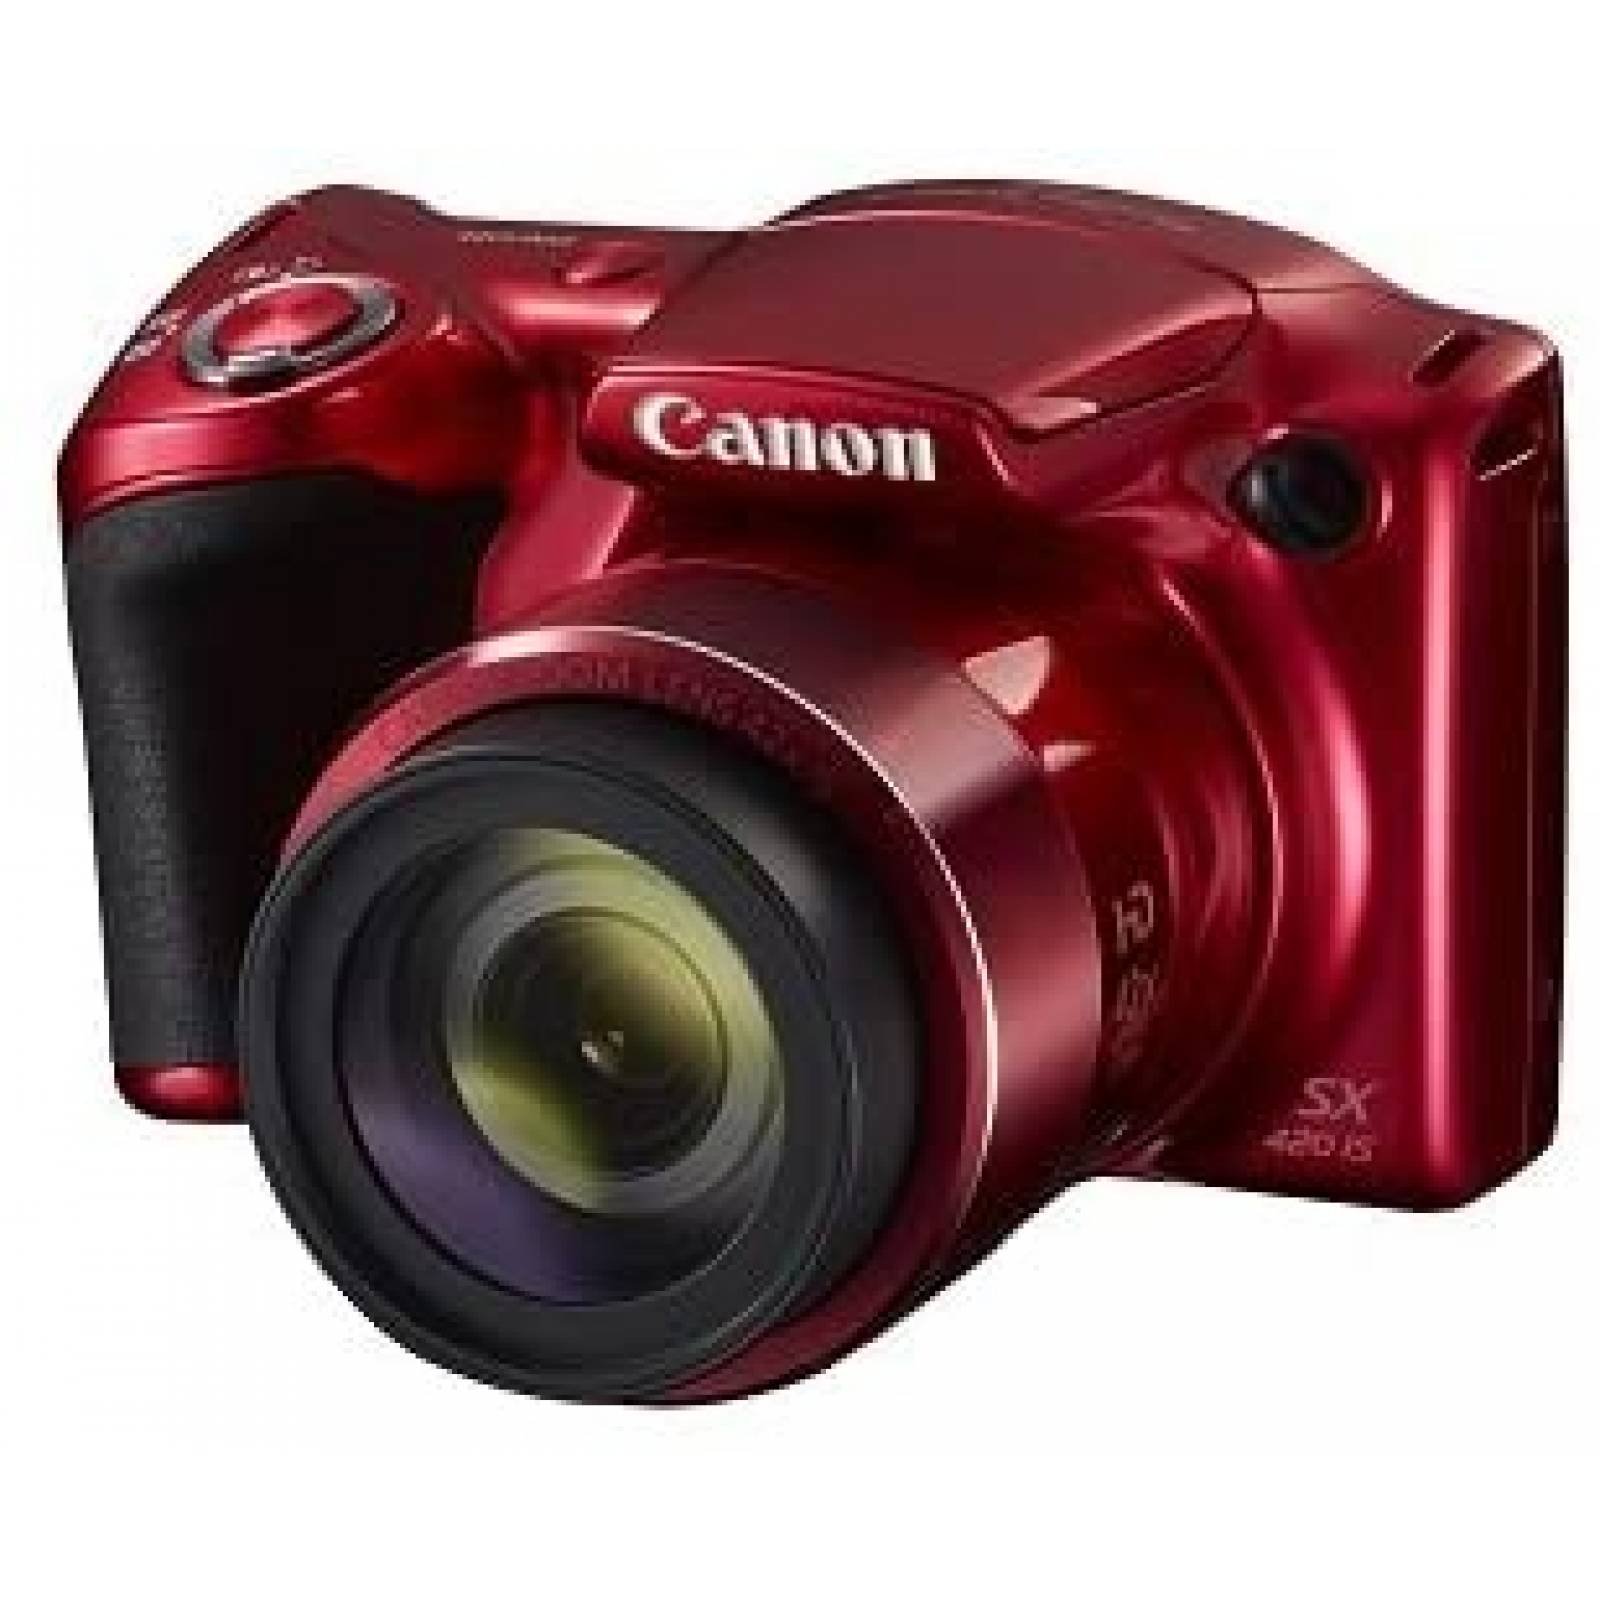 Cámara Profesional Canon PowerShot SX420 WiFi Digital -Rojo